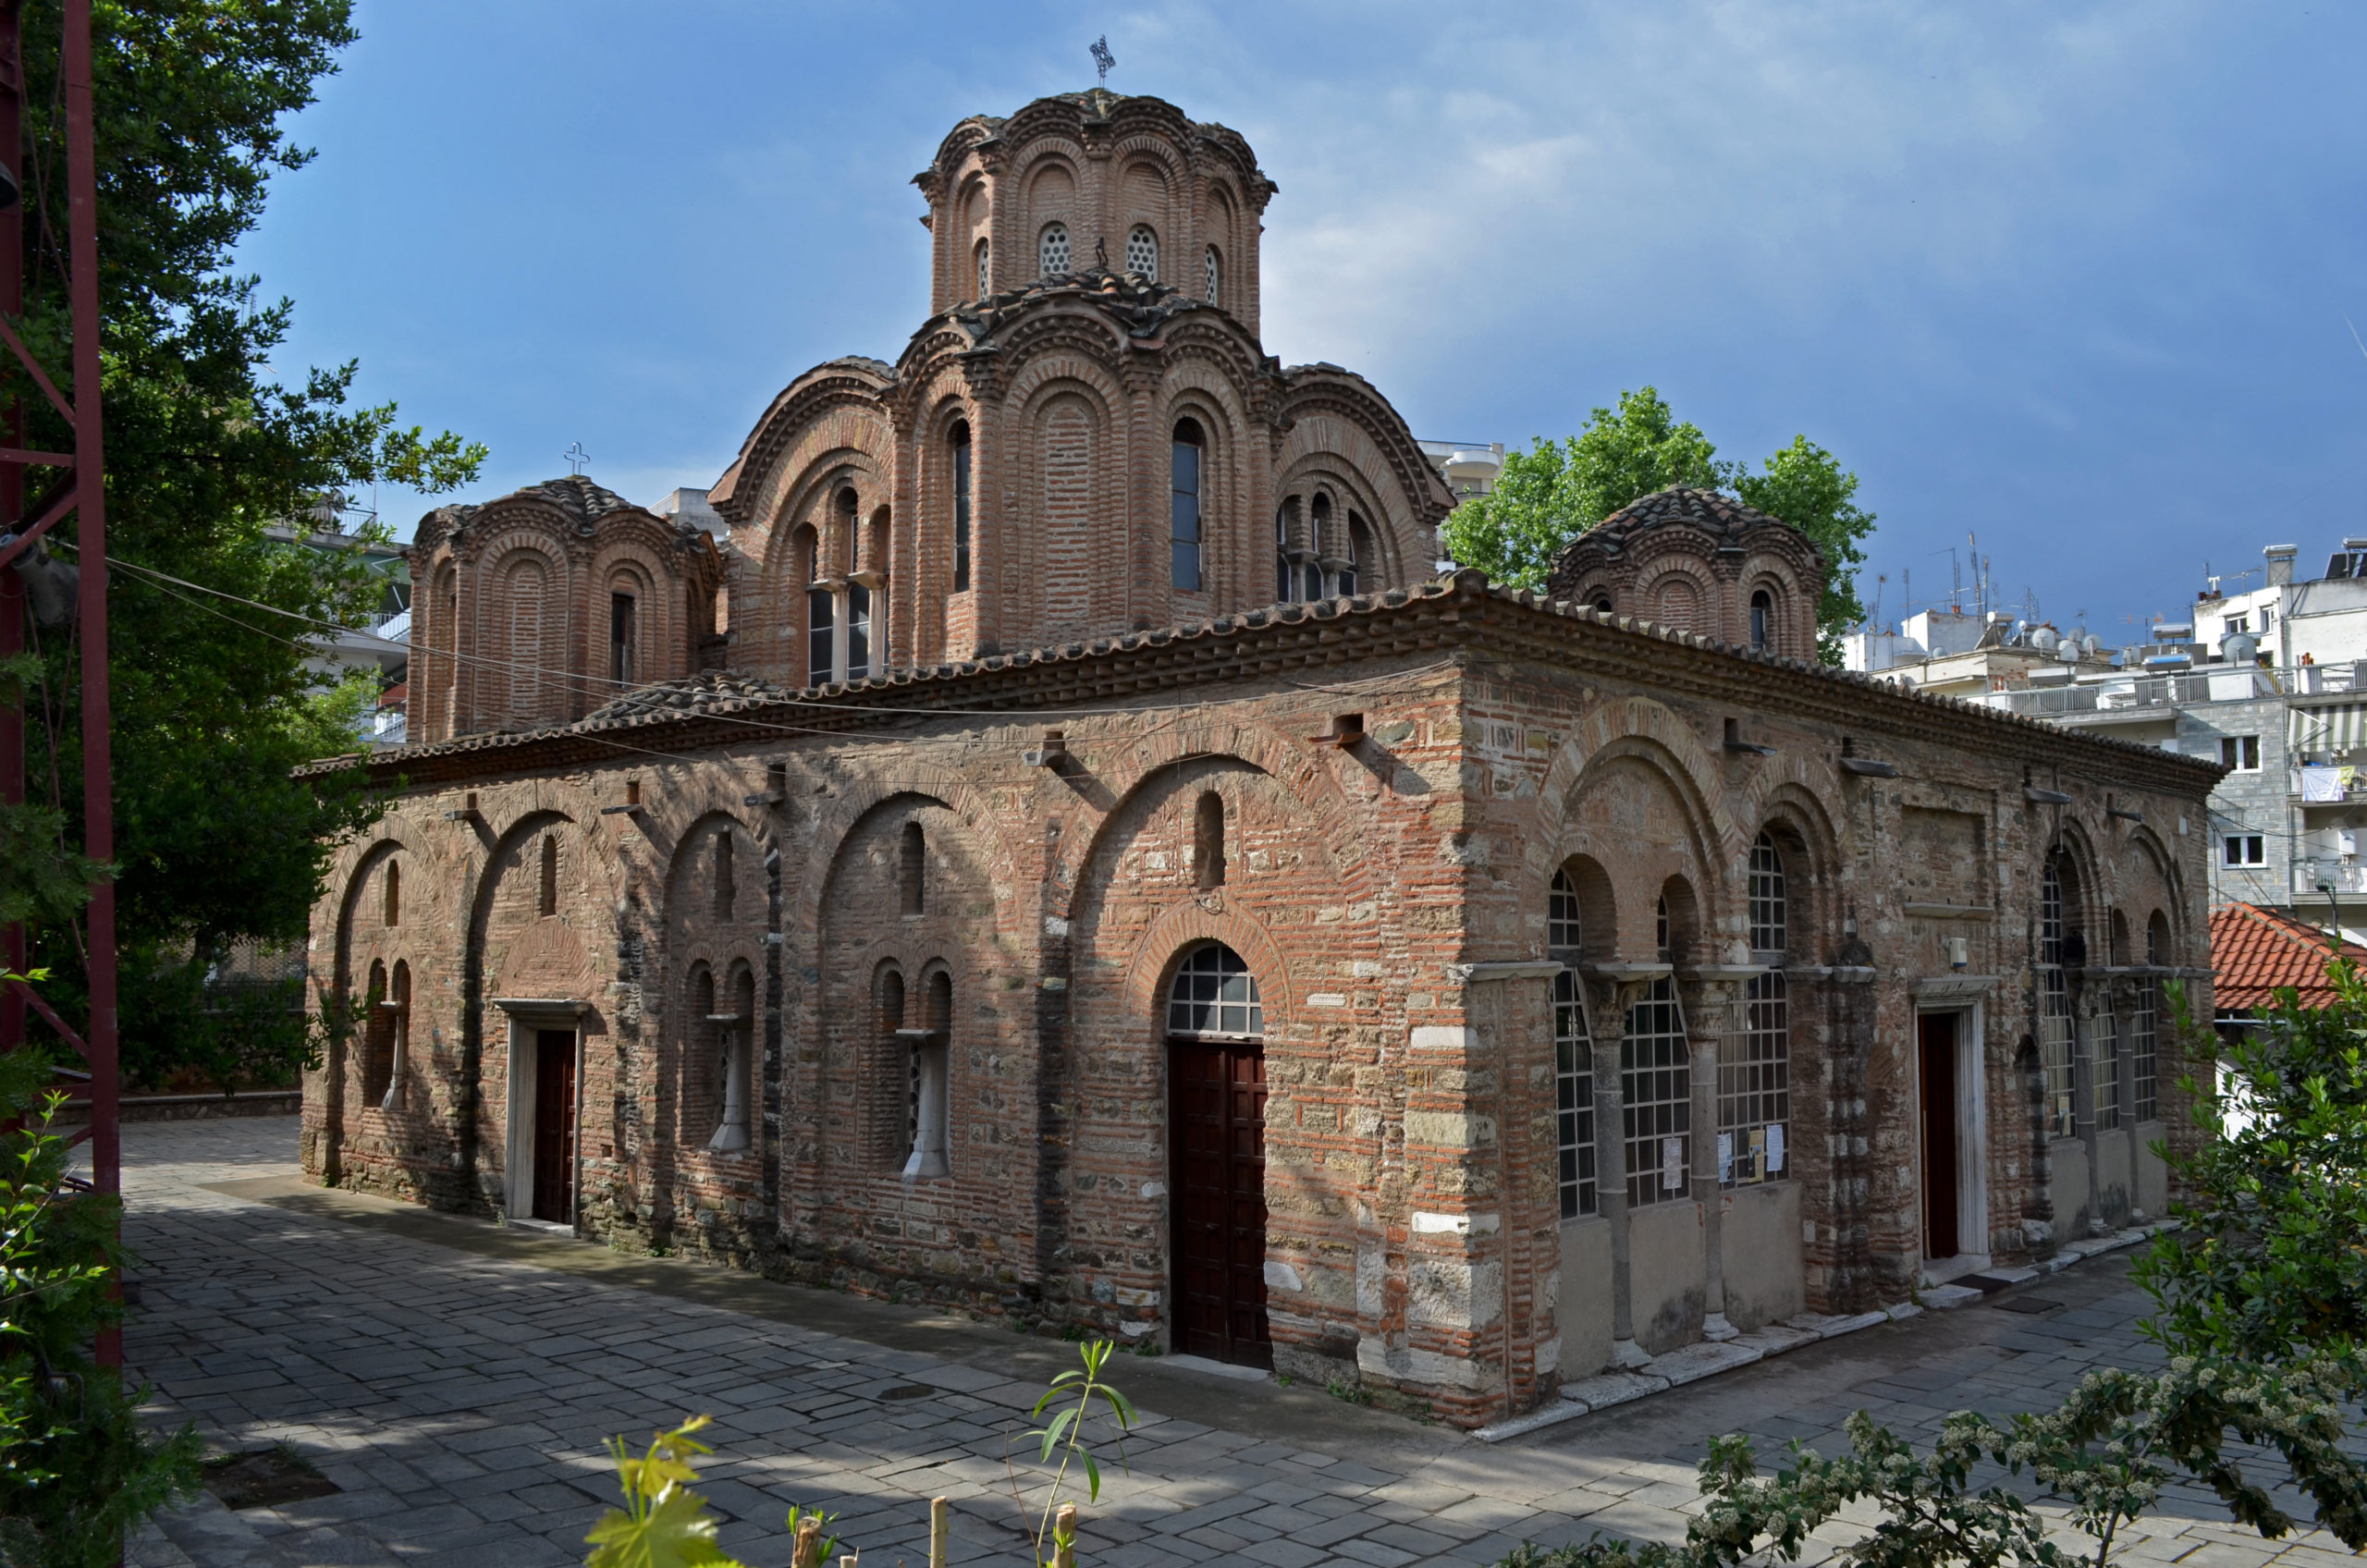 Late Byzantine Church Architecture Smarthistory Guide To Byzantine Art